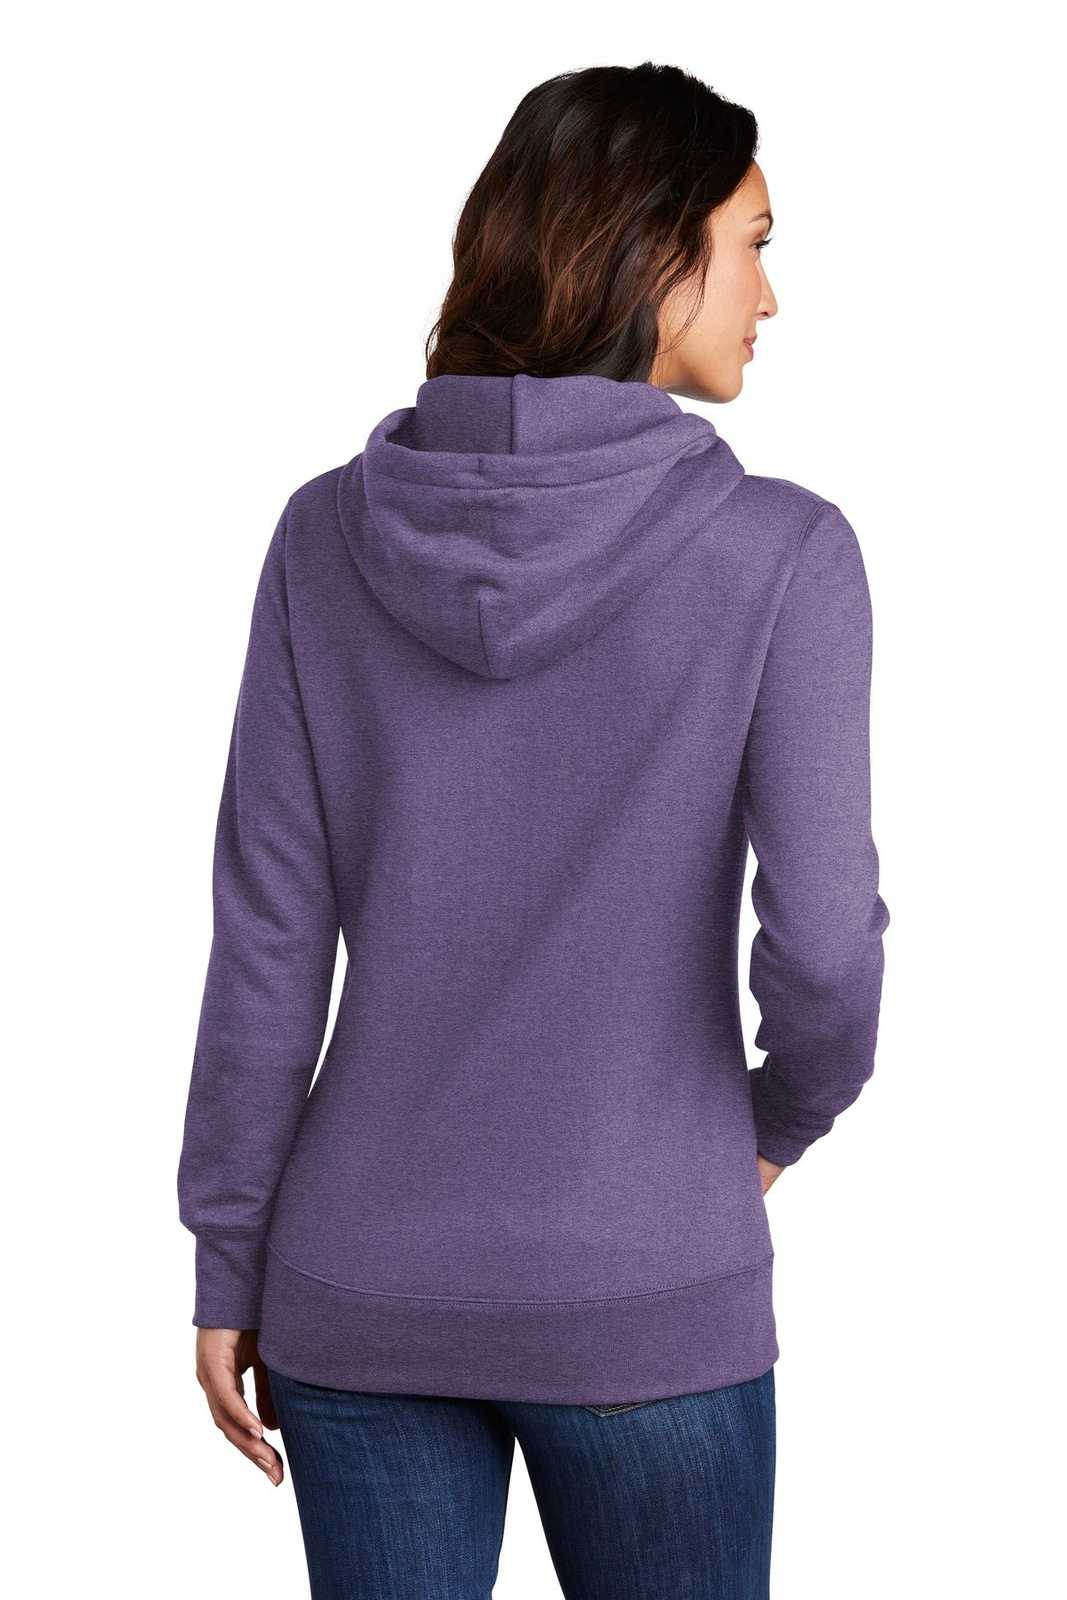 Port &amp; Company LPC78H Ladies Core Fleece Pullover Hooded Sweatshirt - Heather Purple - HIT a Double - 2